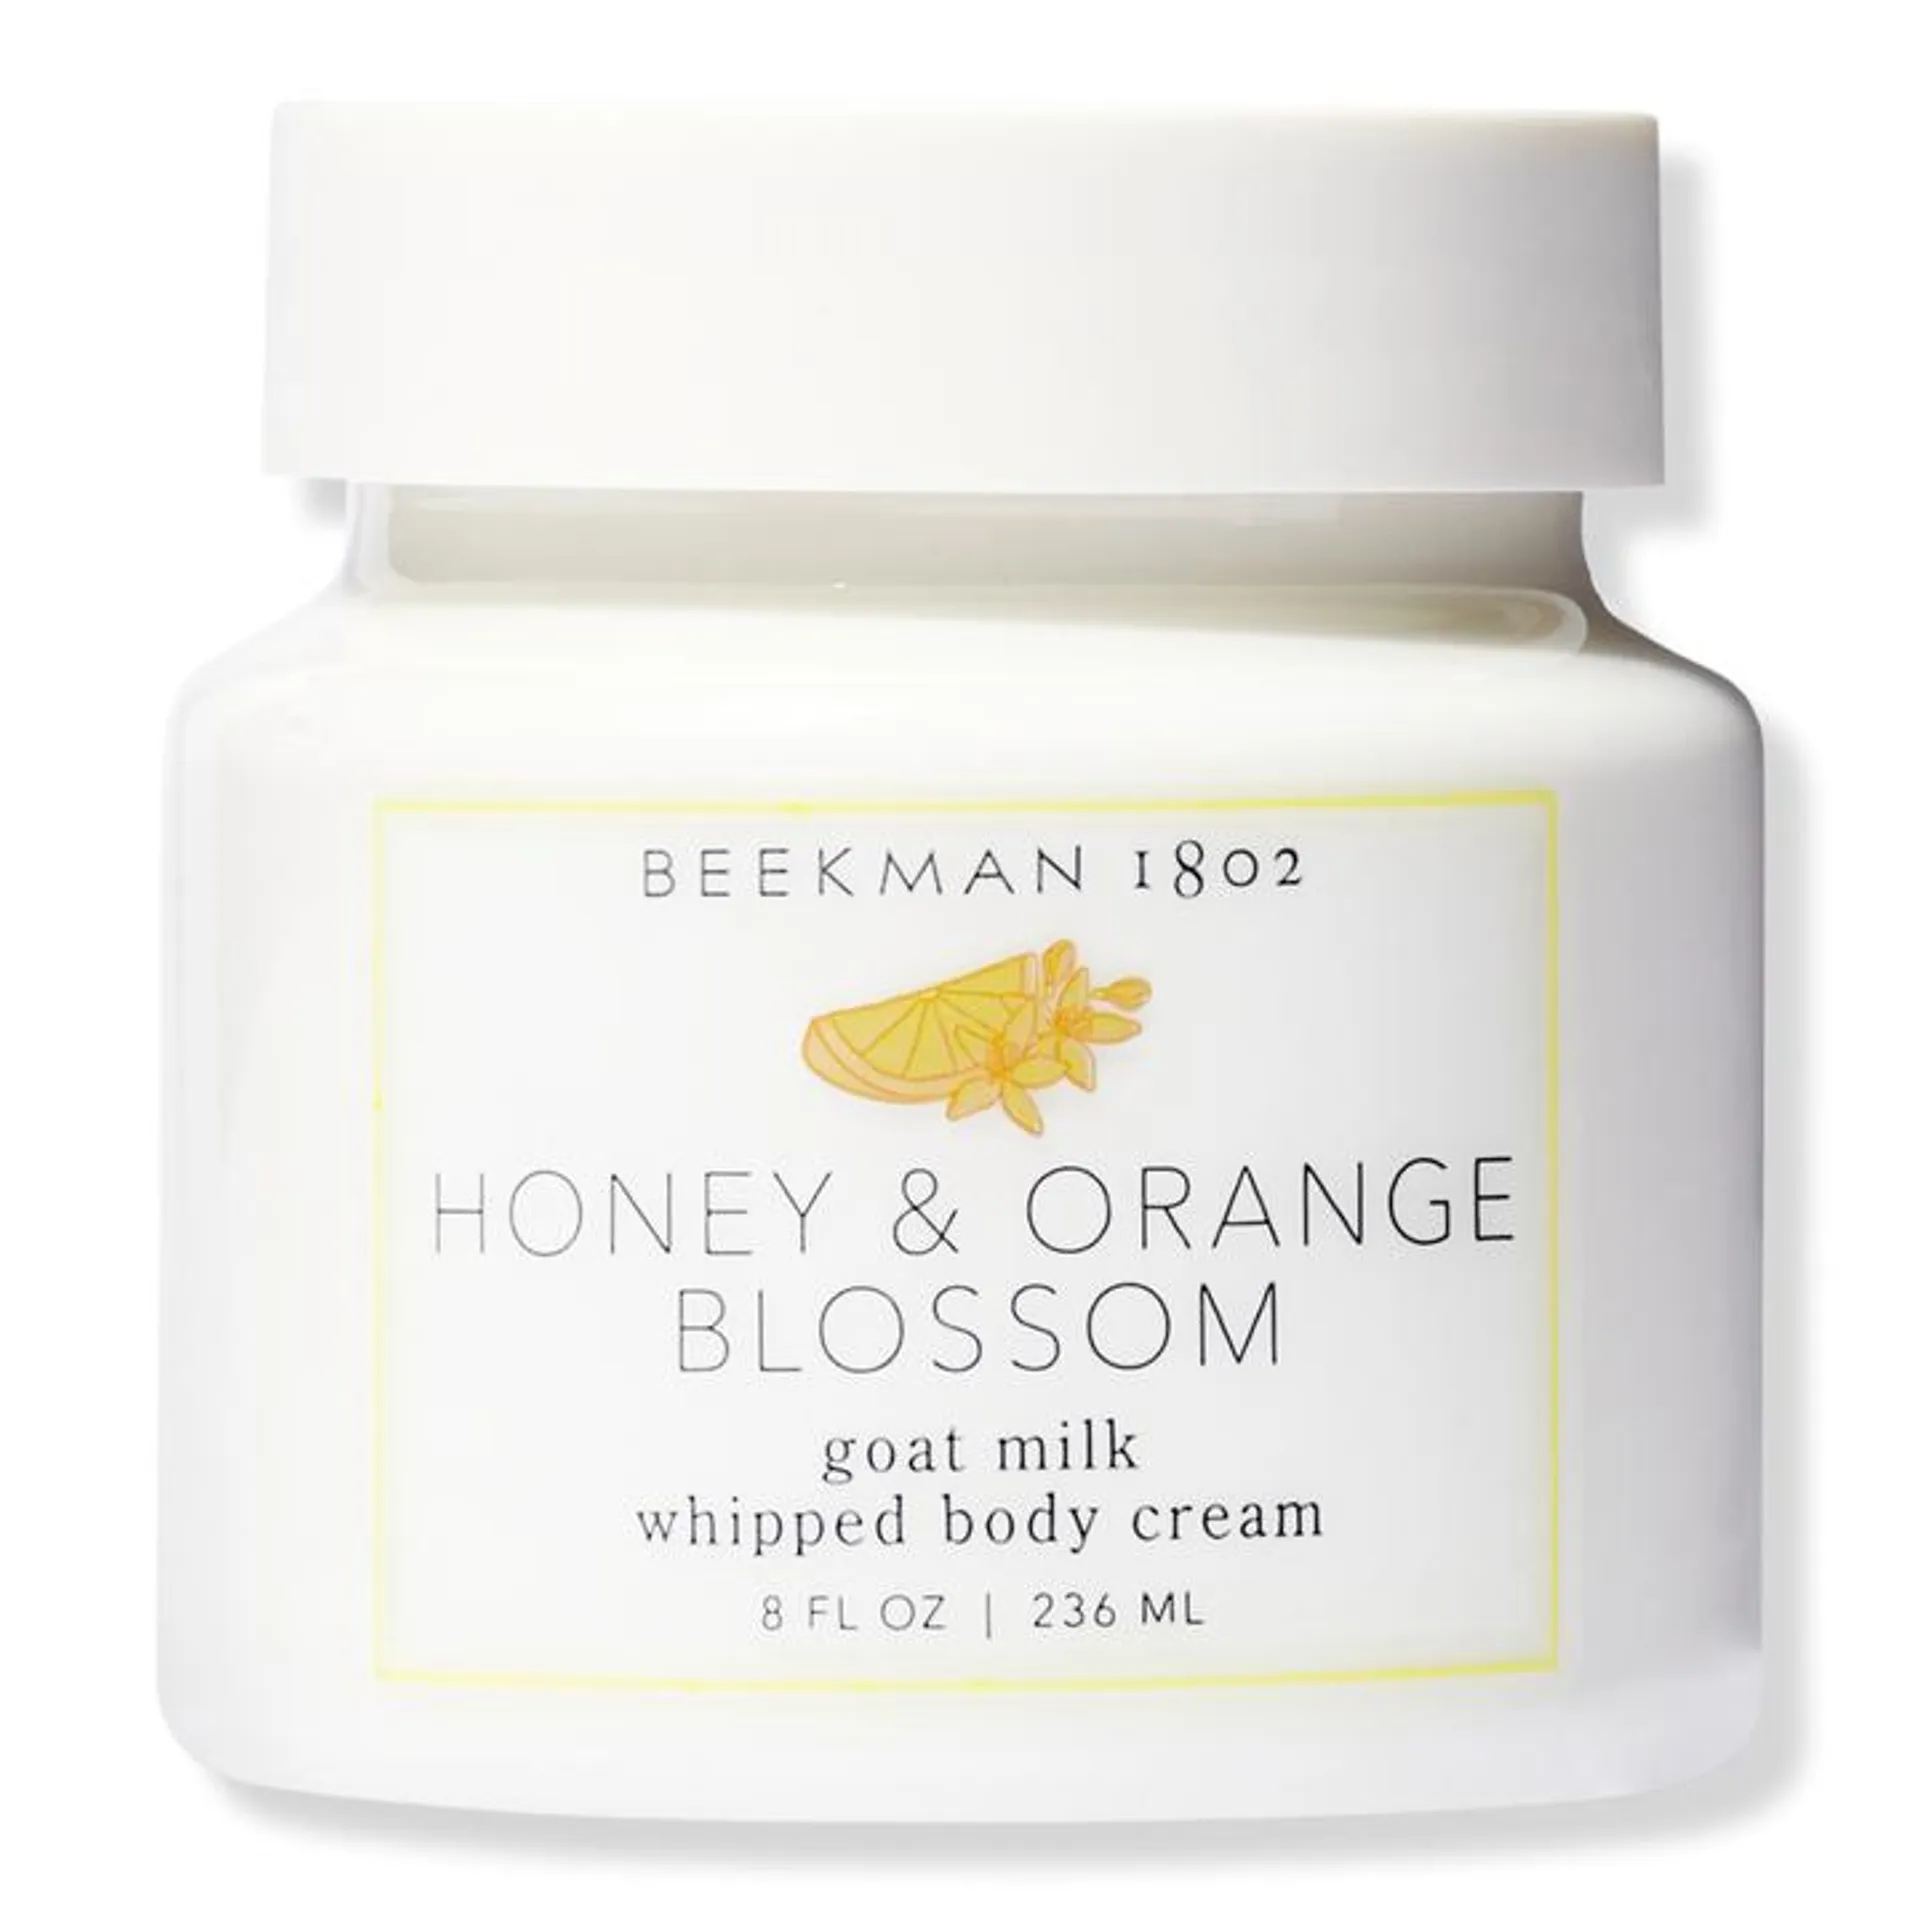 Honey & Orange Blossom Whipped Body Cream